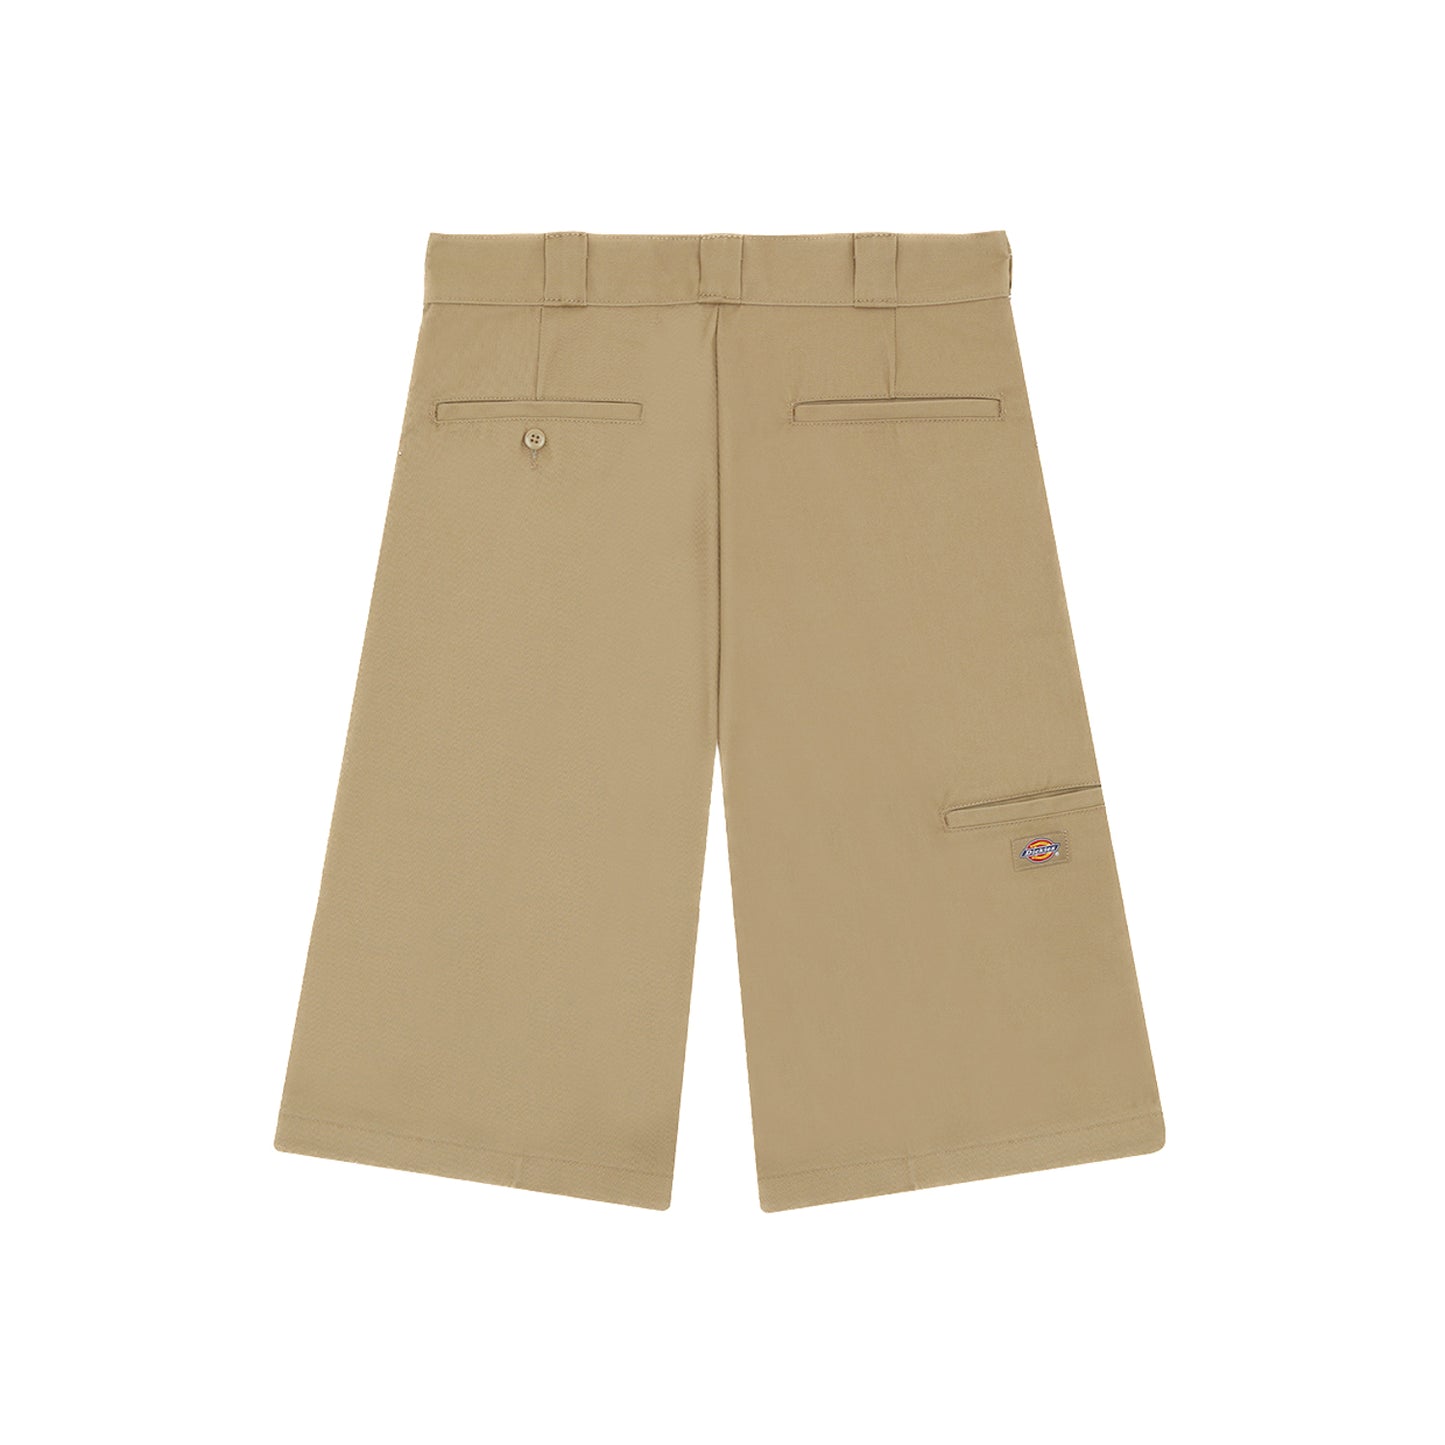 13 Inch Multi Pocket Shorts - Khaki